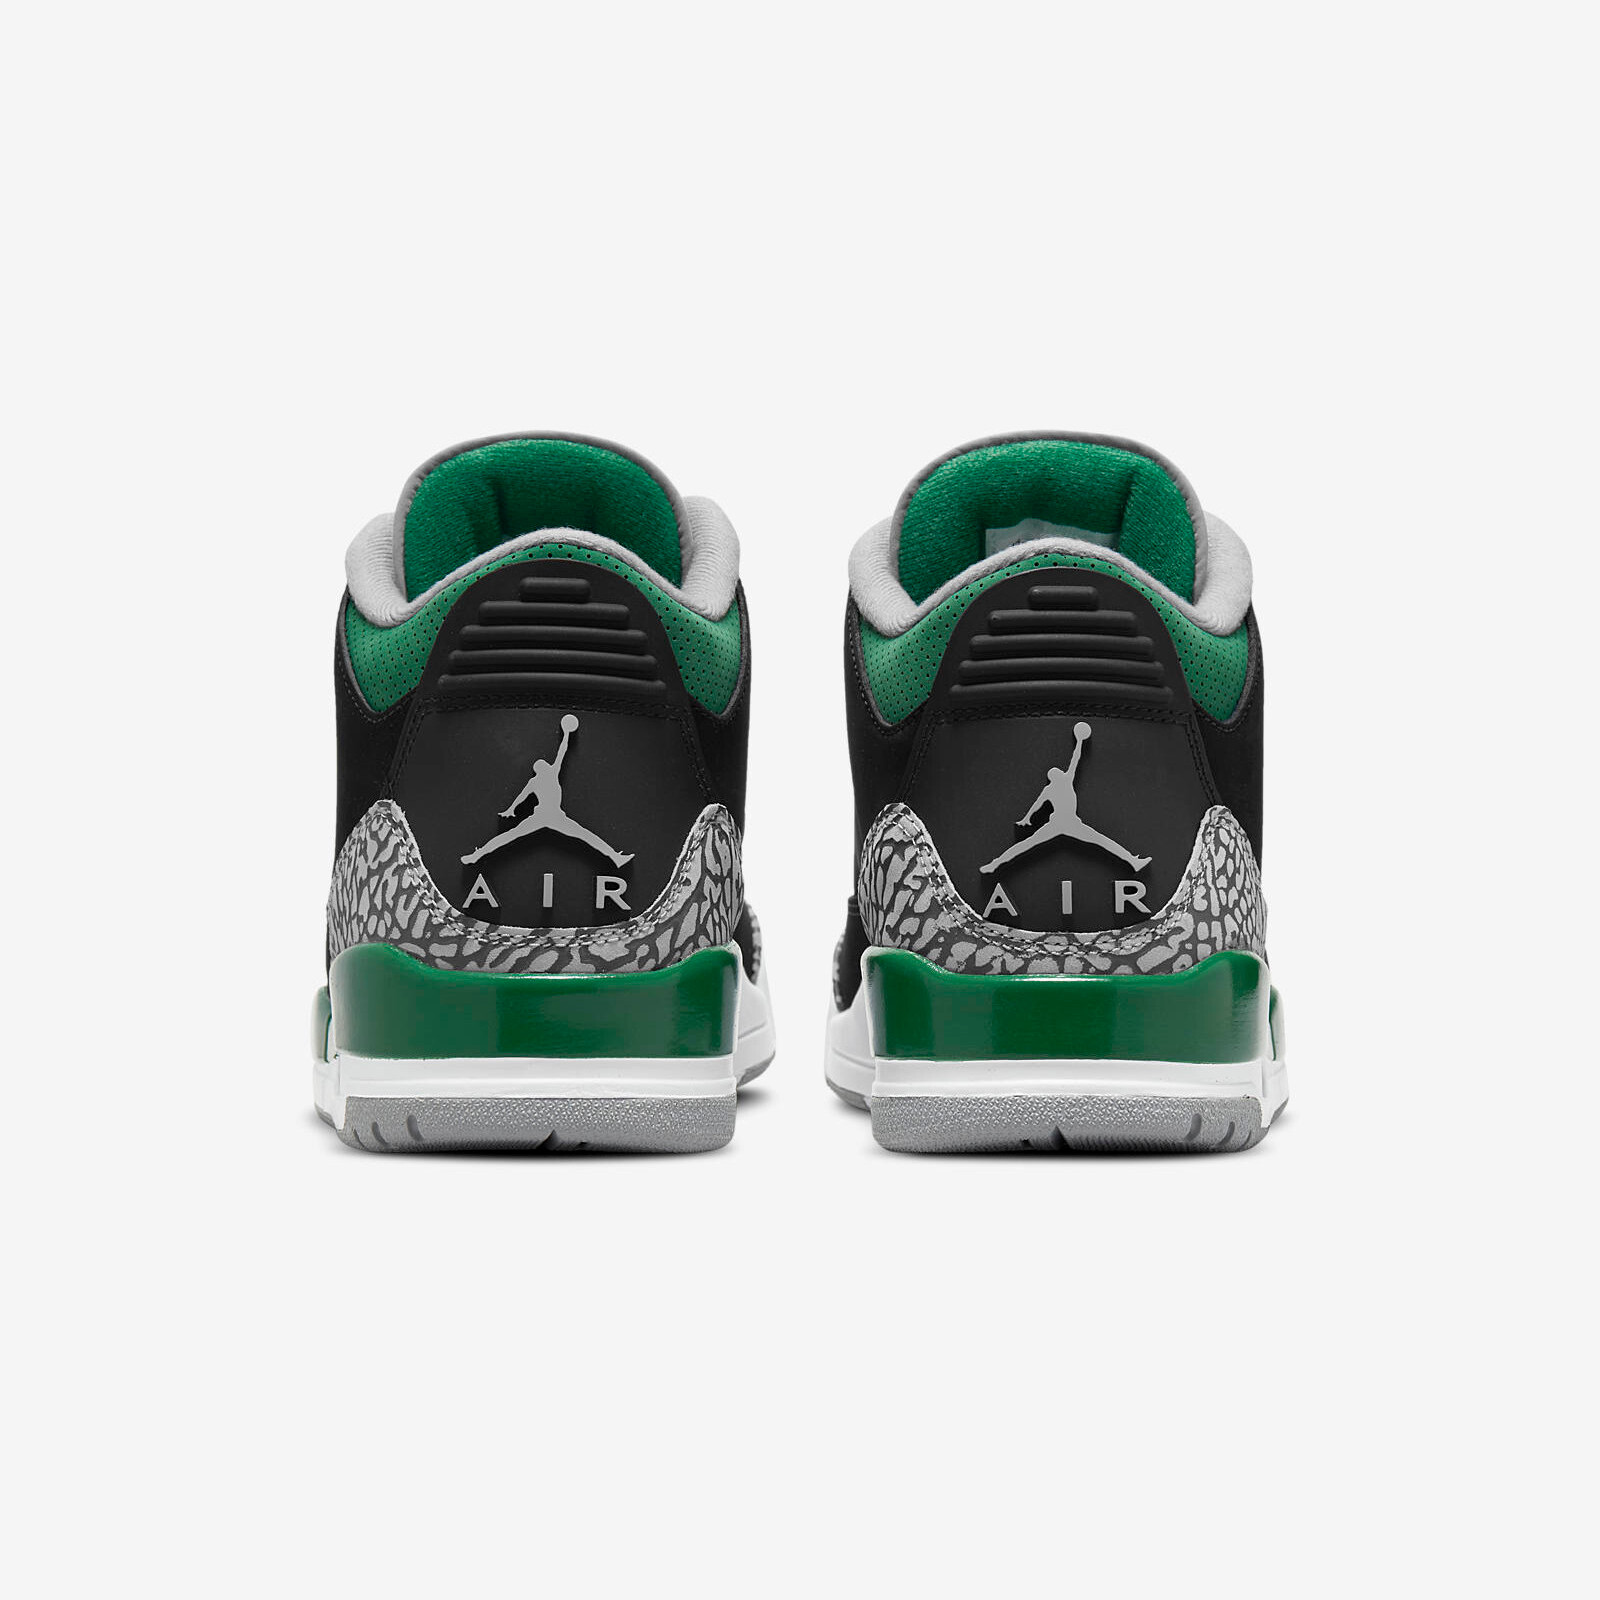 Air Jordan 3 Retro
« Pine Green »